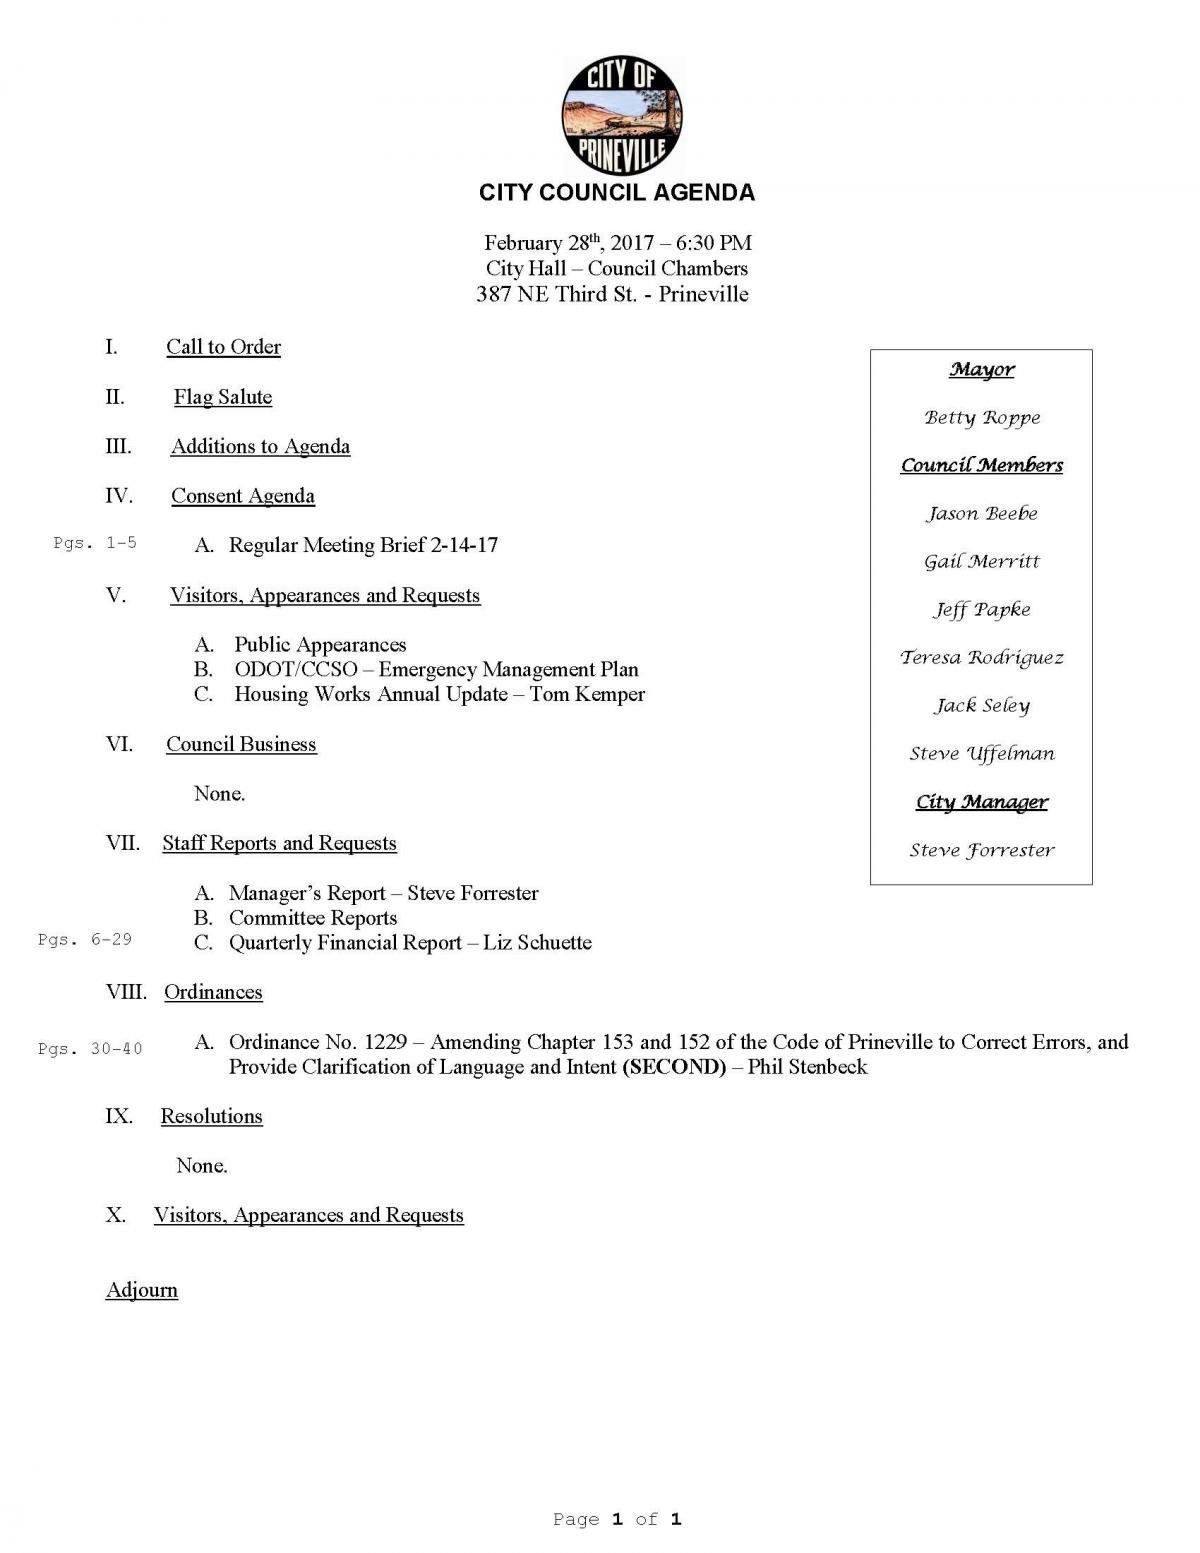 Council Agenda 2-28-17